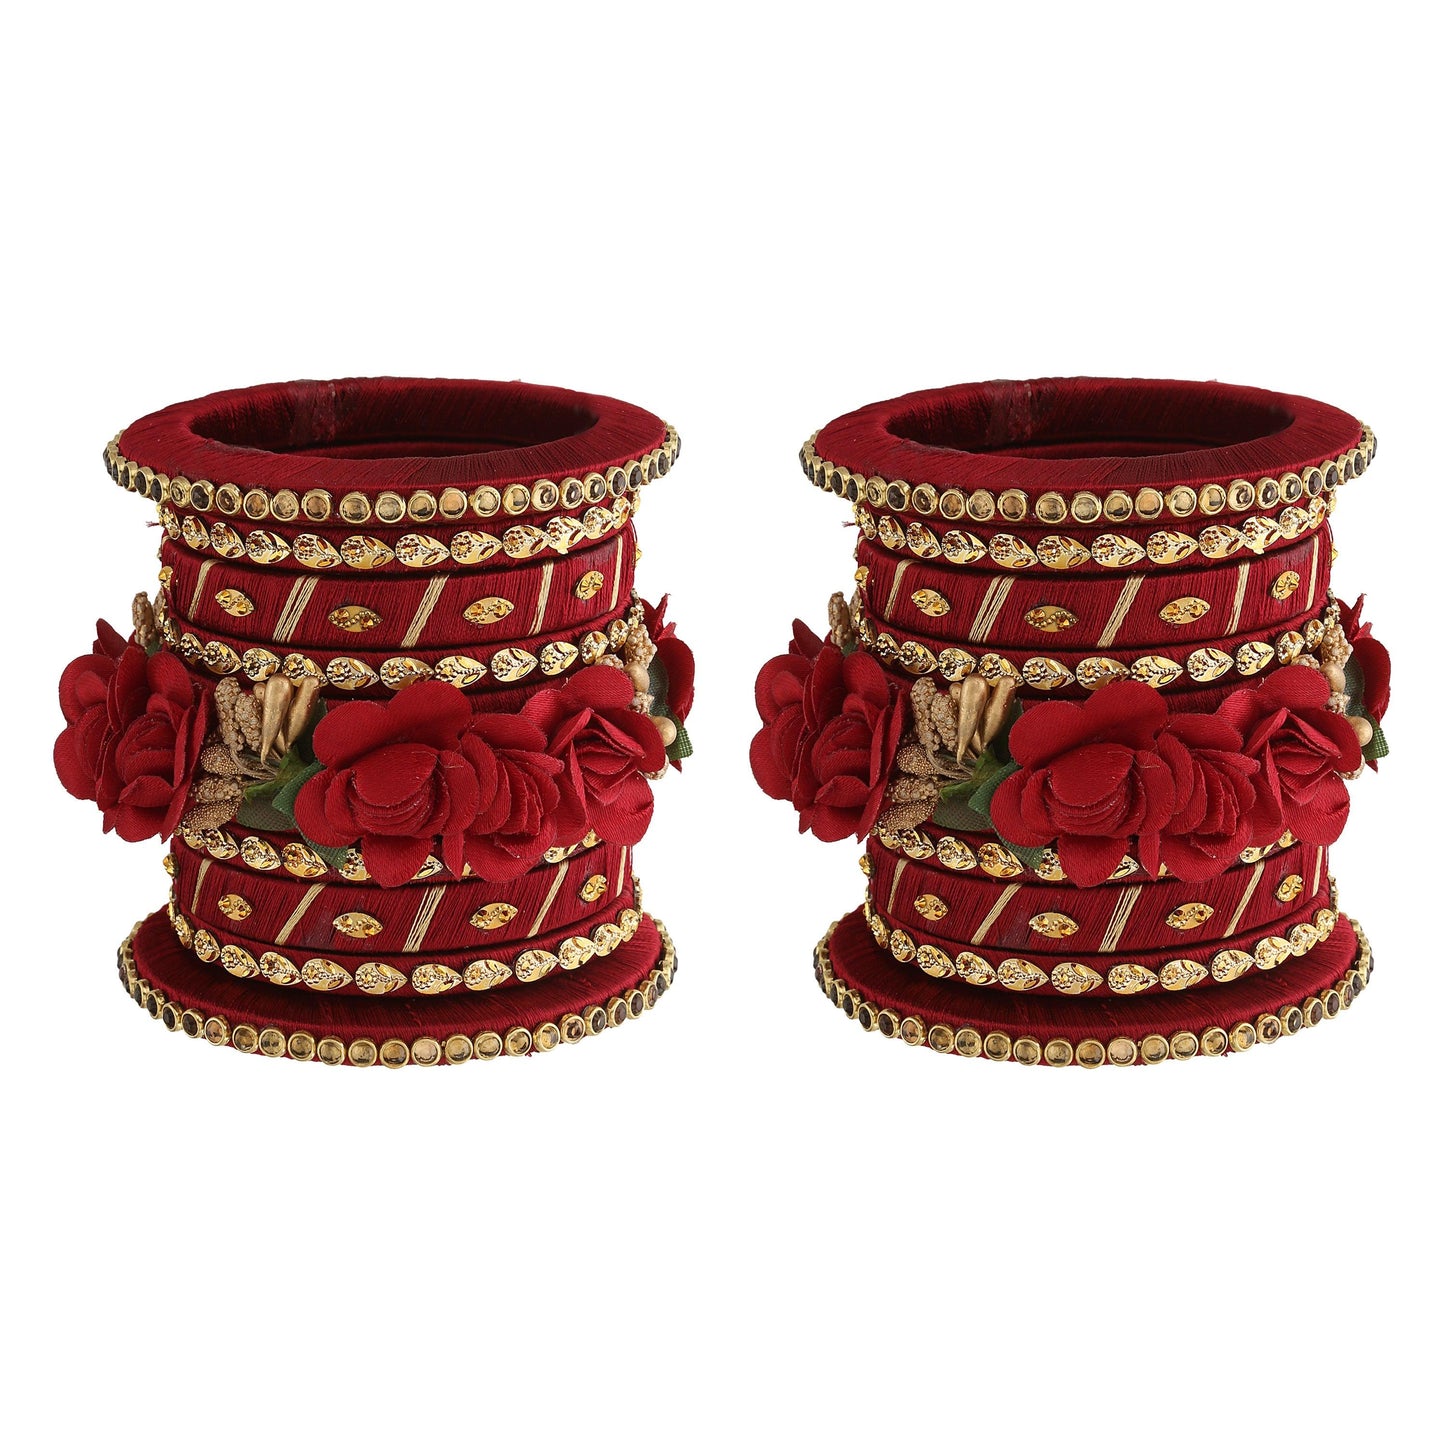 sukriti stylish handmade maroon flower designer silk thread plastic bridal chuda wedding bangles for women – set of 18